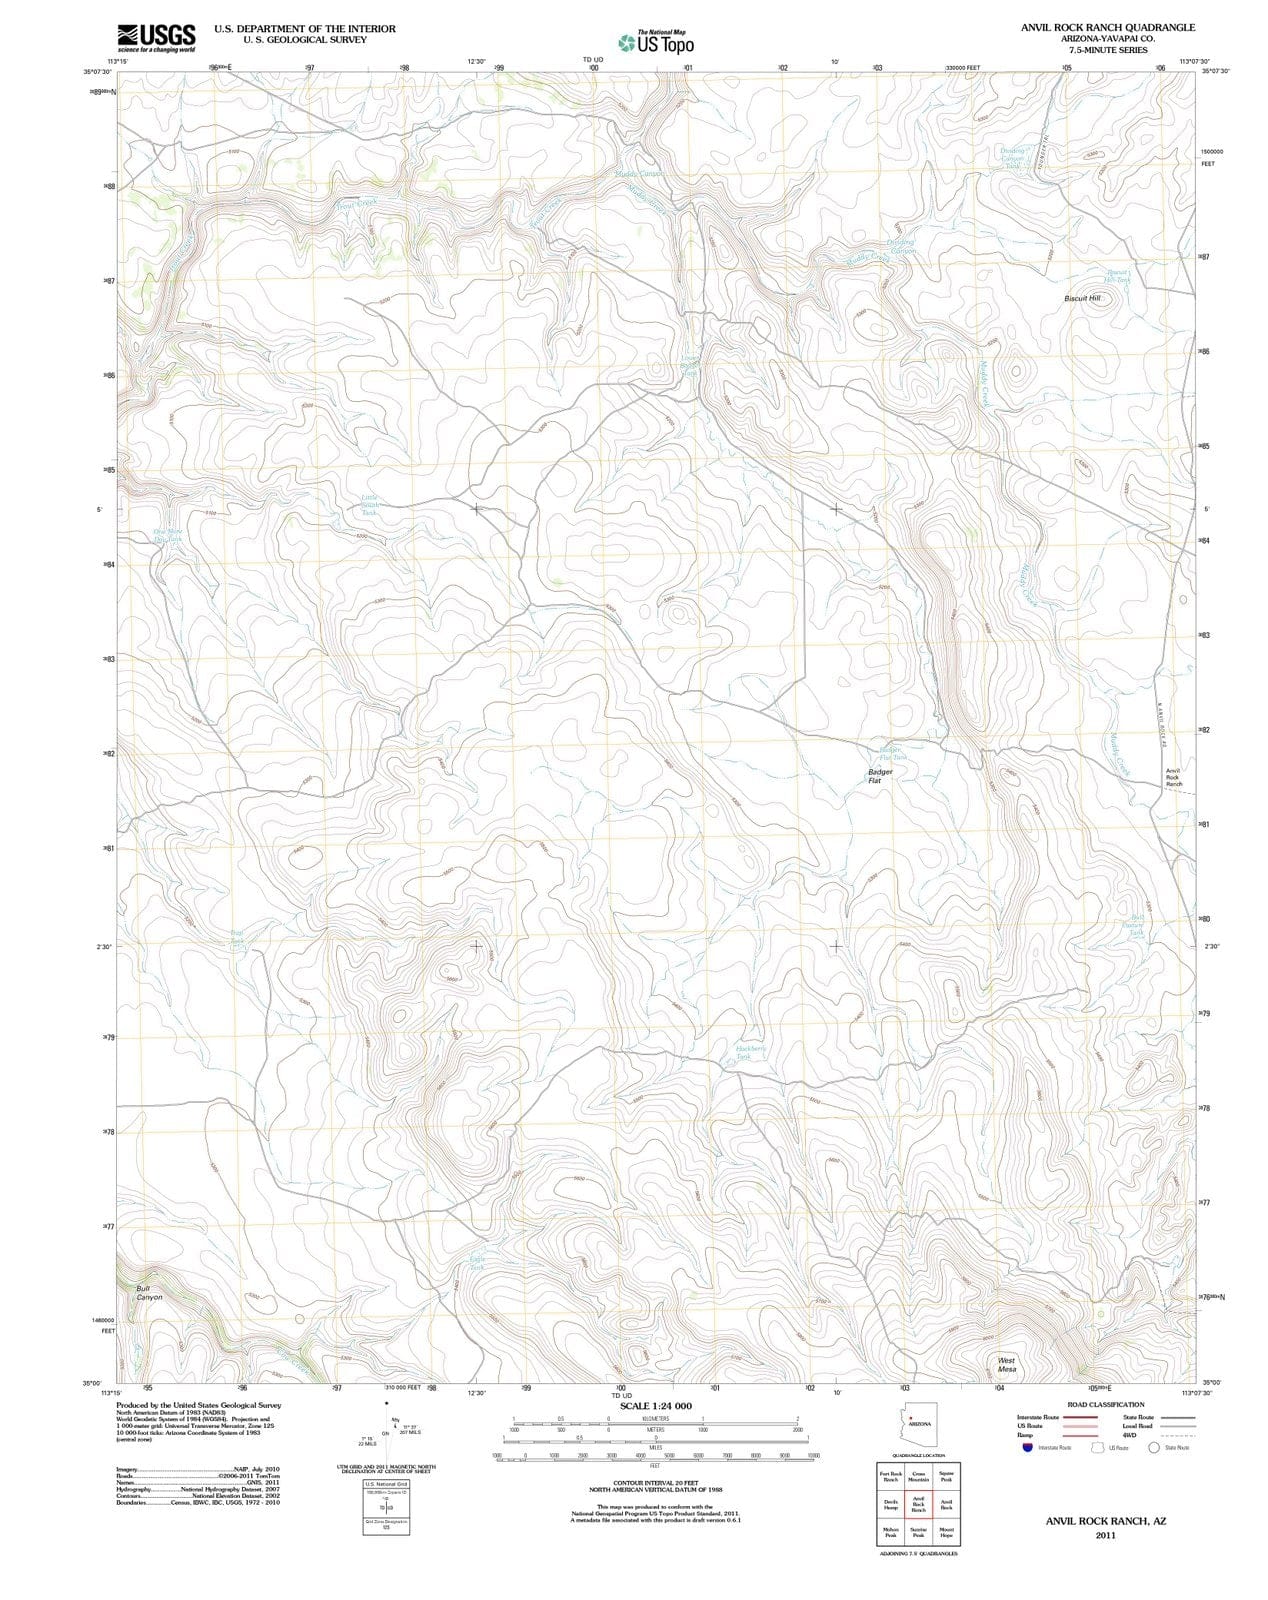 2011 Anvil Rock Ranch, AZ - Arizona - USGS Topographic Map